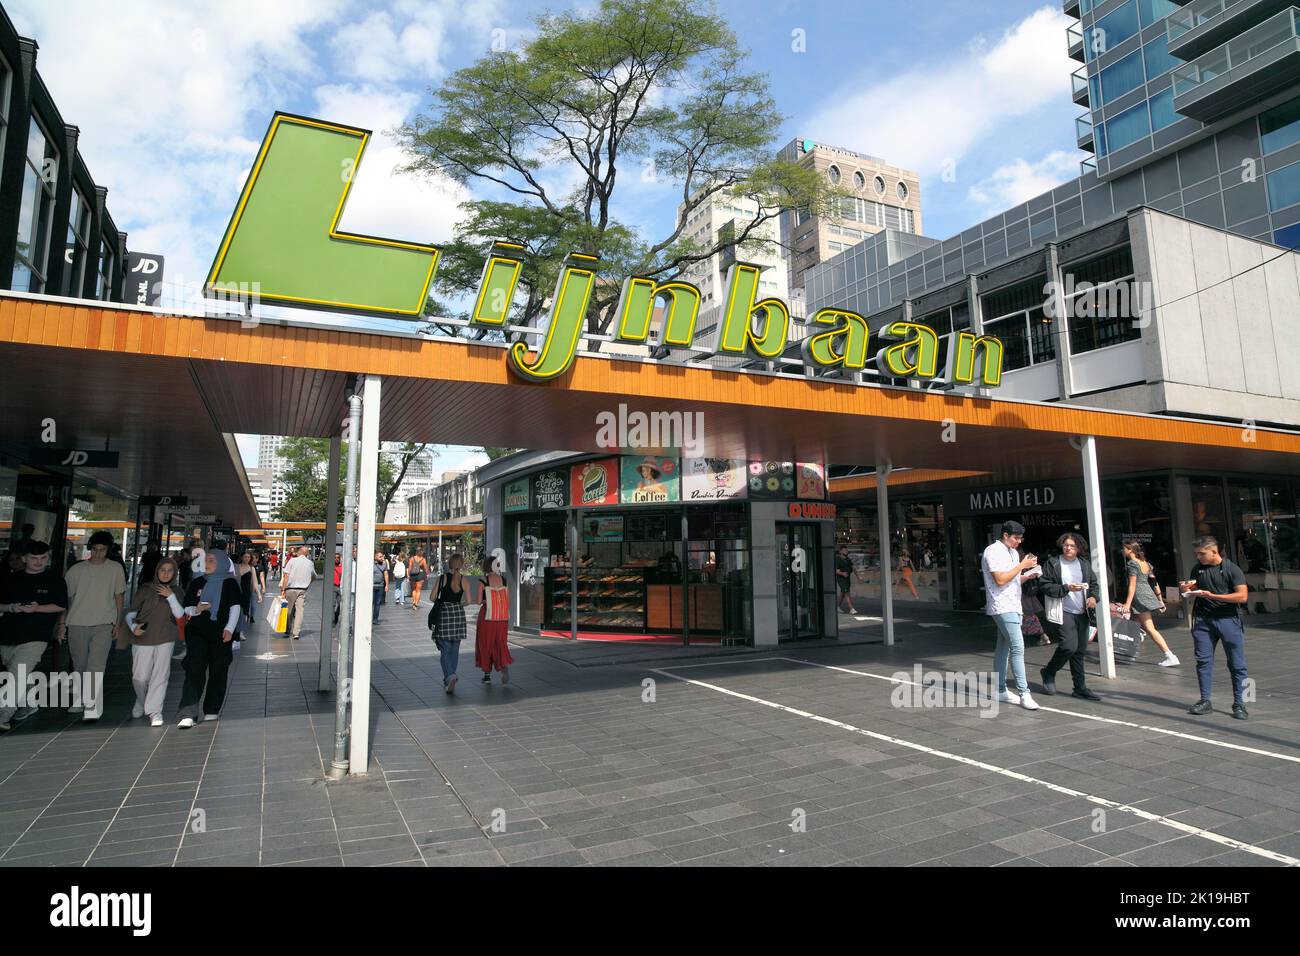 The Lijnbaan shopping area in Rotterdam, The Netherlands. Stock Photo